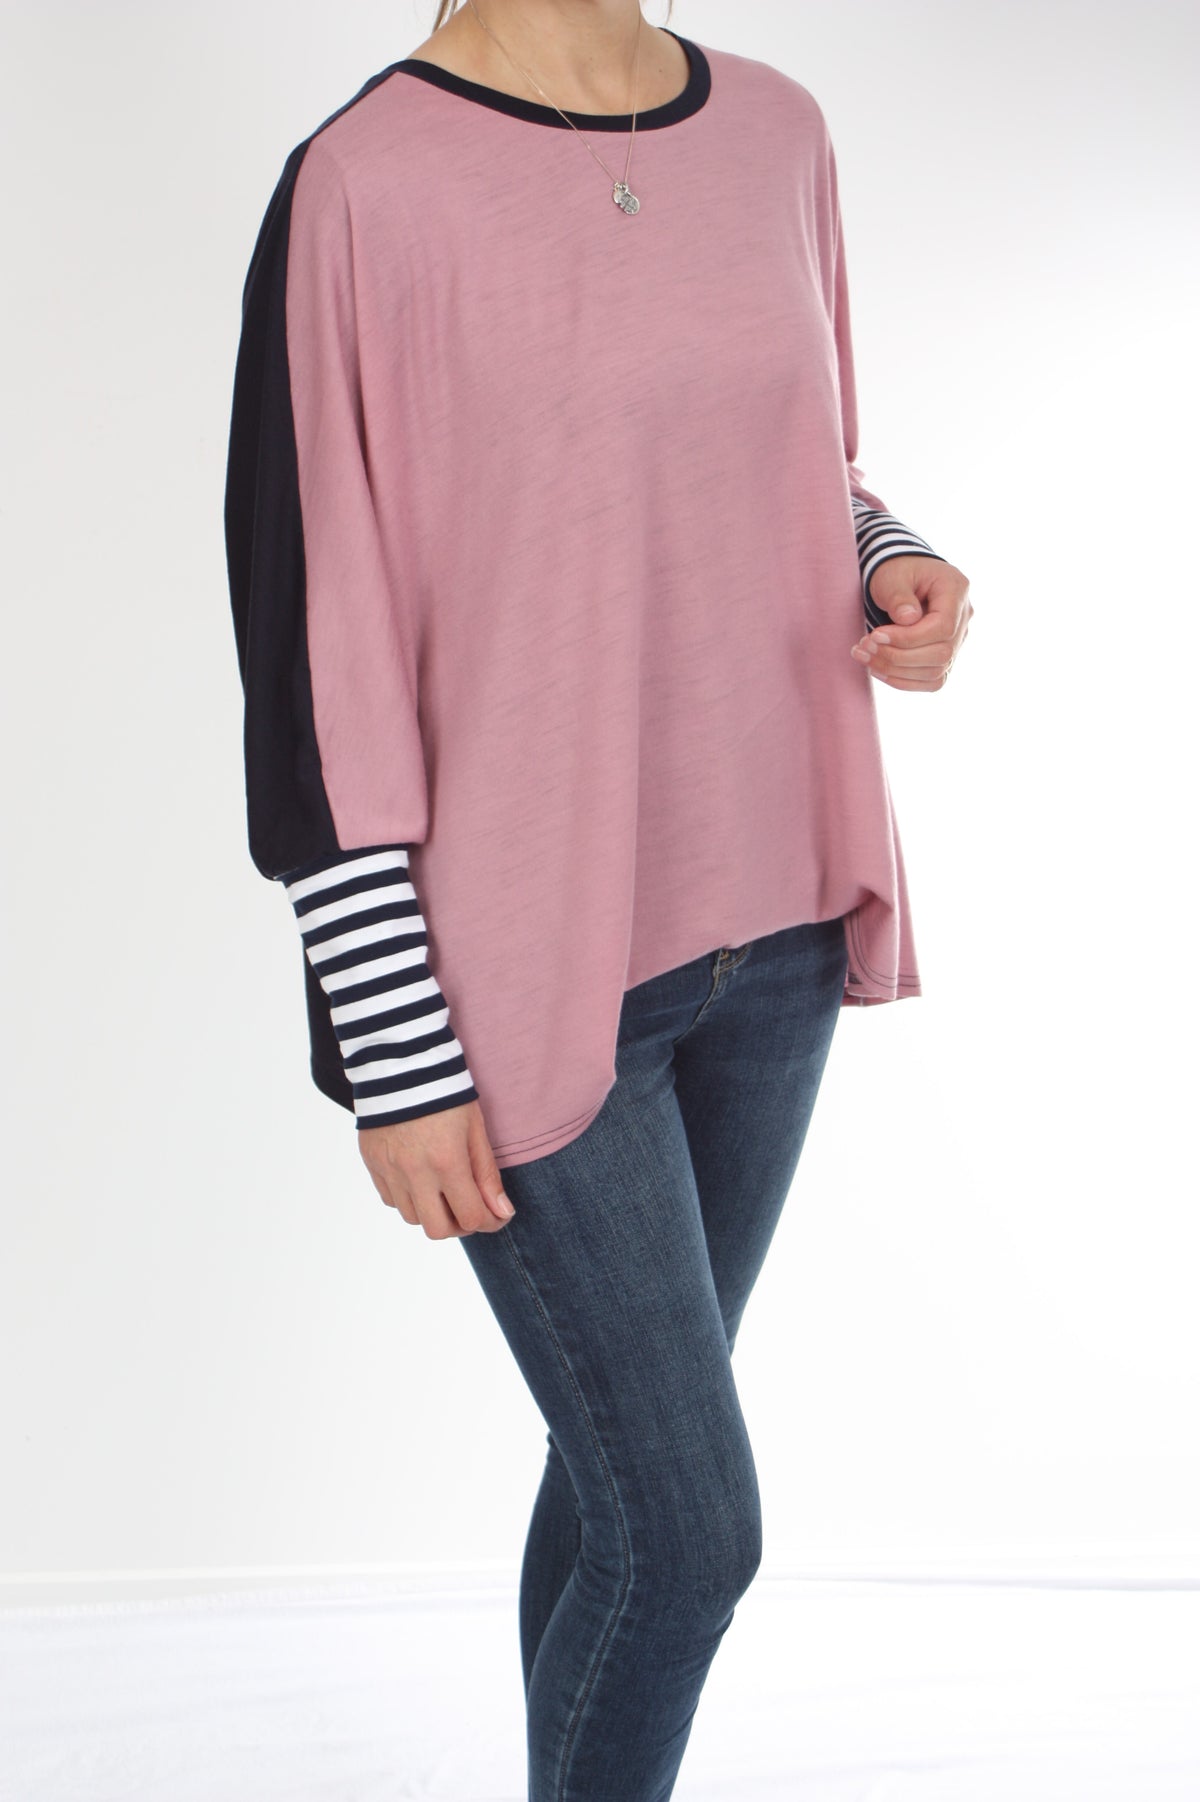 Alexa Top - Merino - Reversible Pink/Navy - Thin Stripe Cuff - Pre-Order